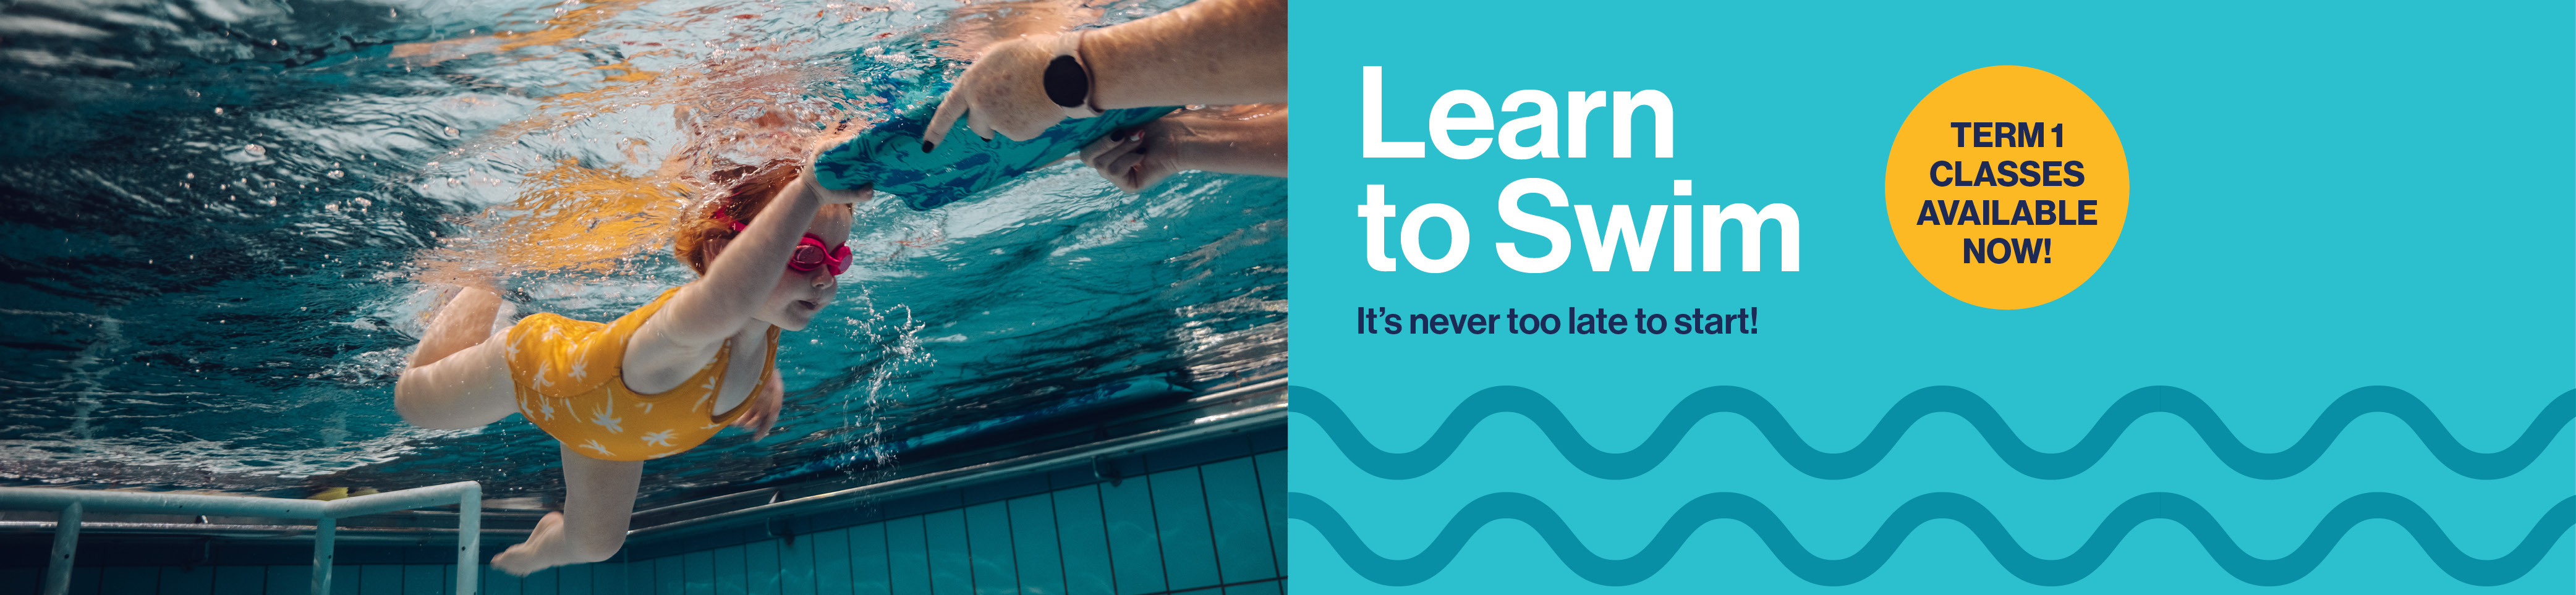 WSAC-051-wsac-learn-to-swim-term-4-banner.jpg